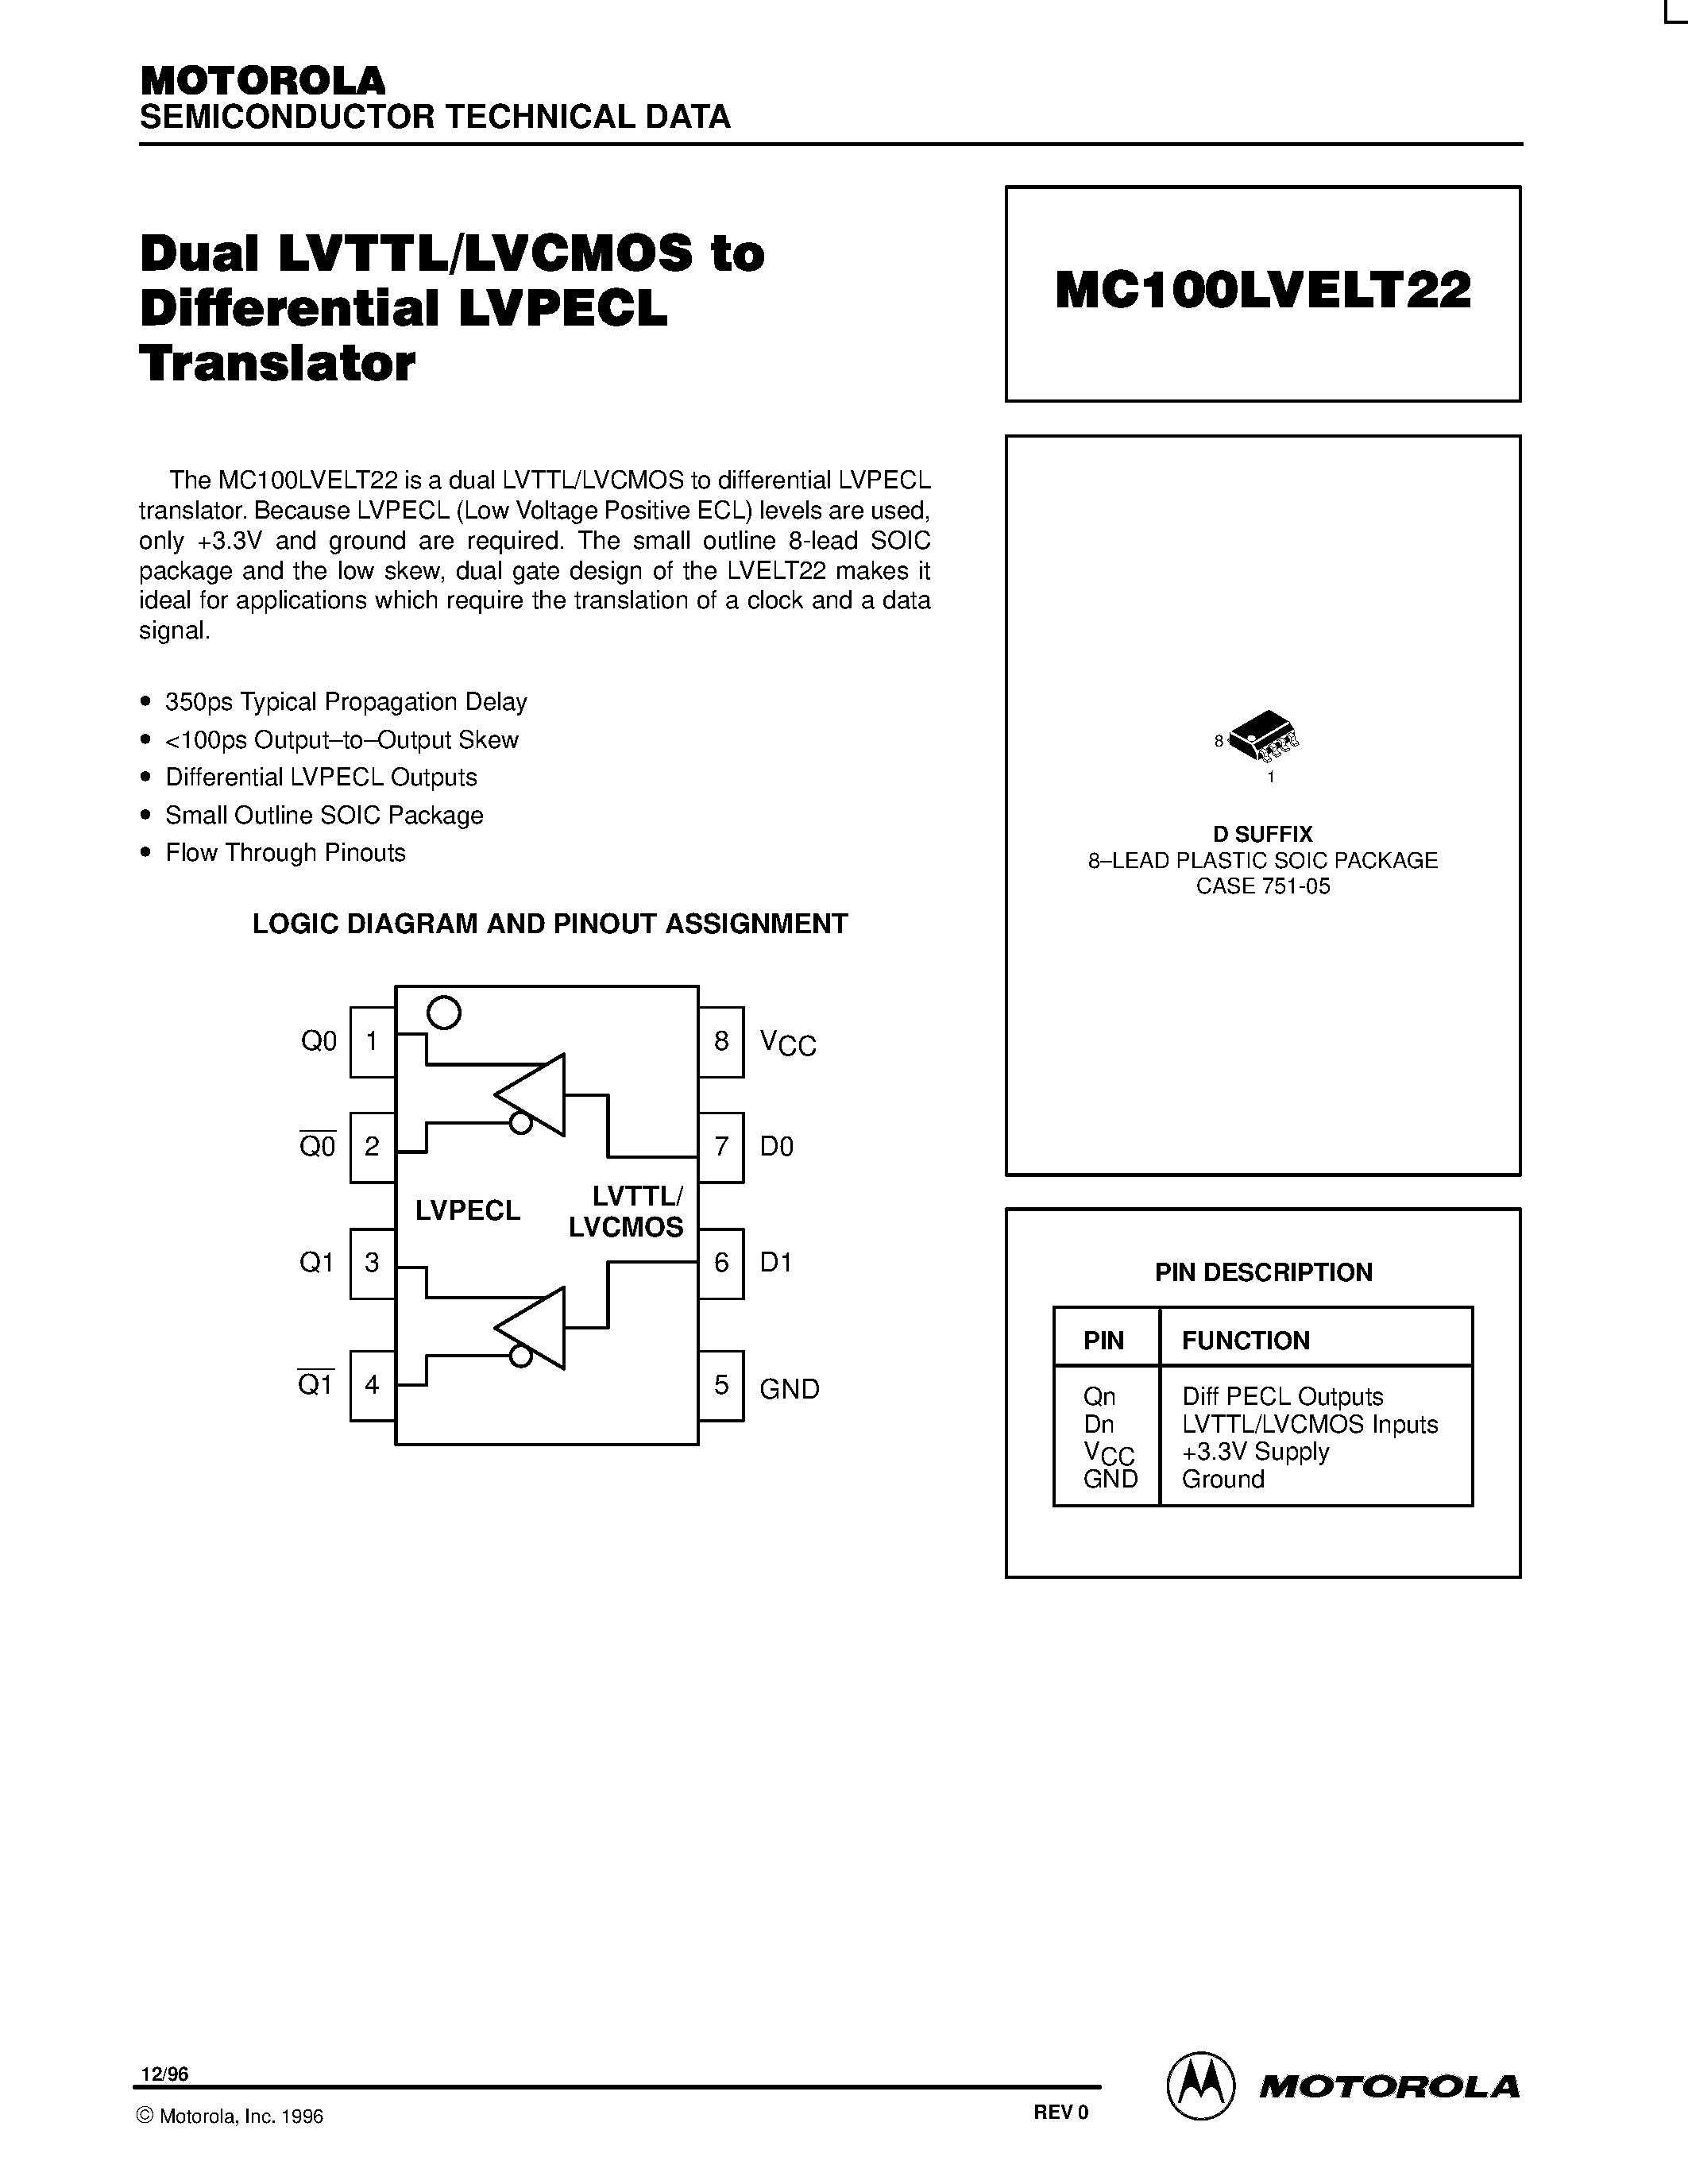 Datasheet MC10LVELT22D - Dual LVTTL/LVCMOS to Differential LVPECL Translator page 1